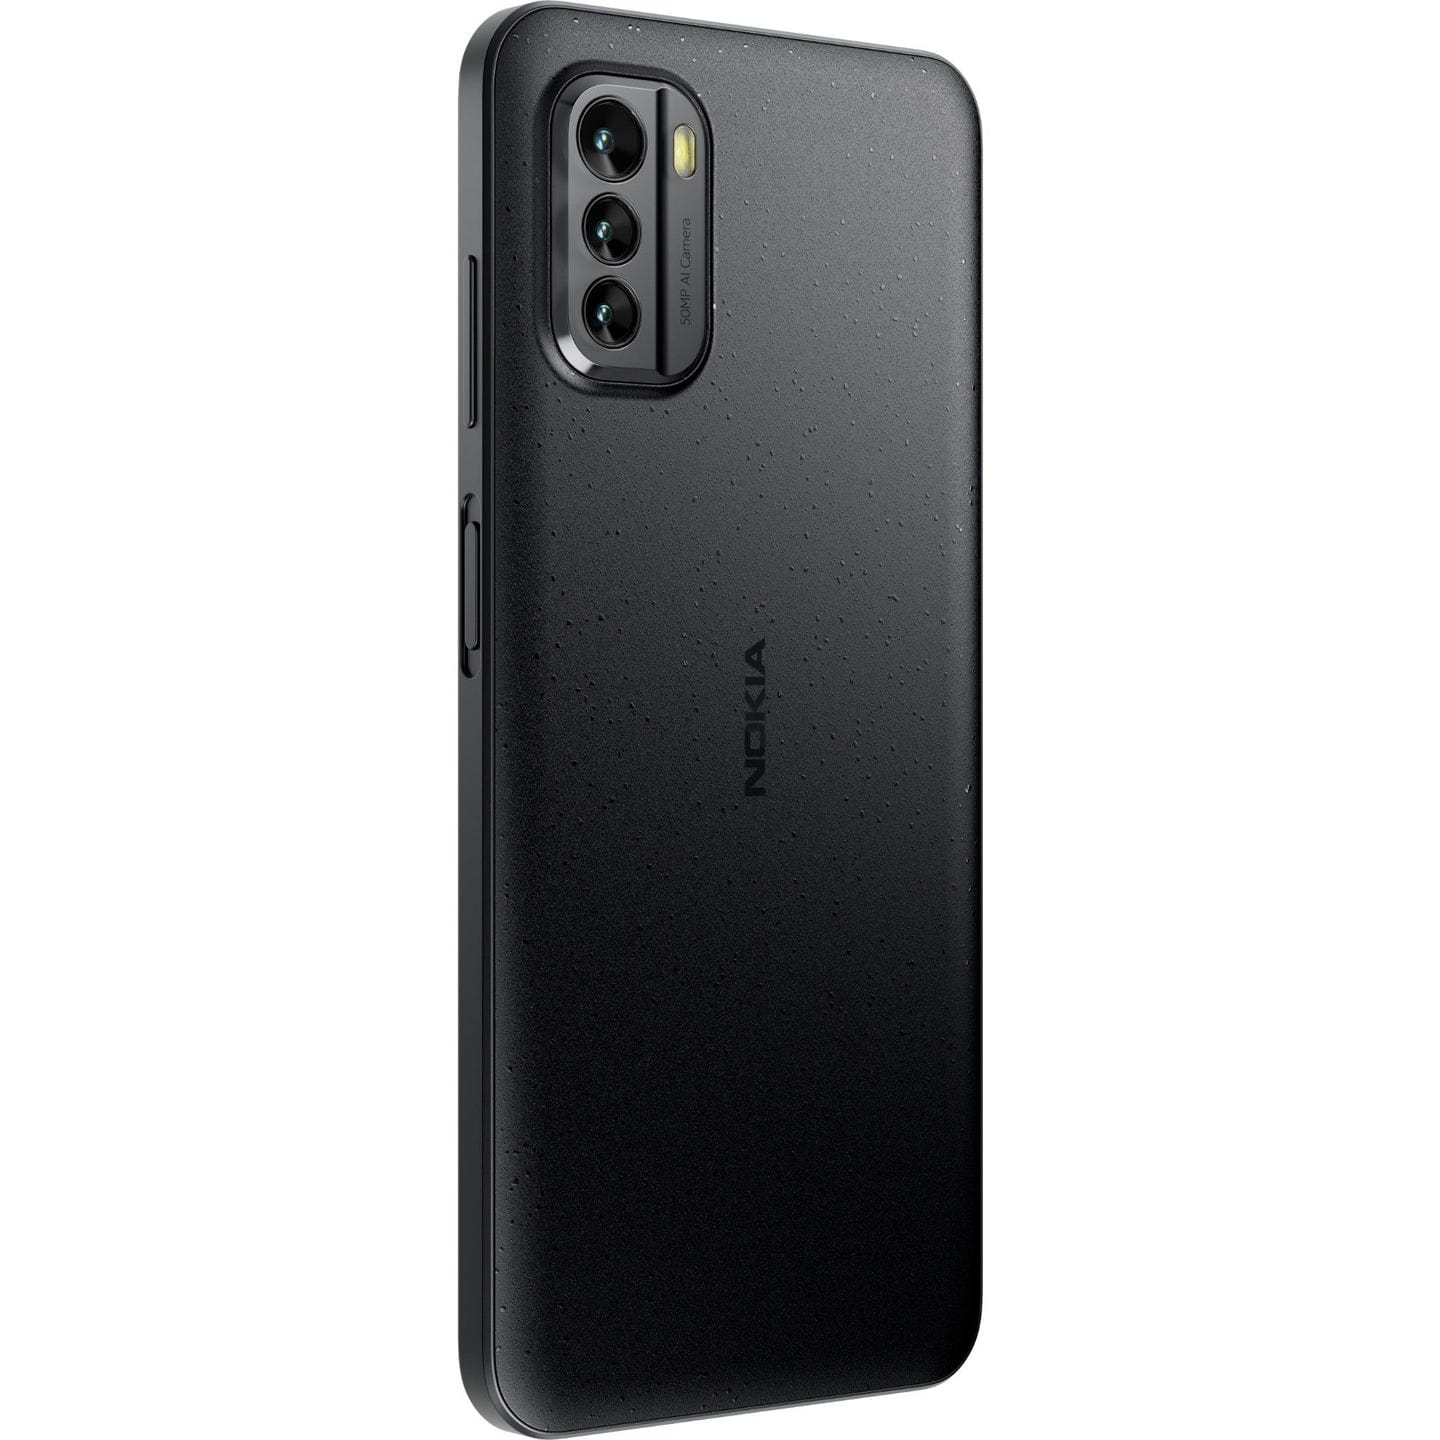 Nokia g60 5g 128gb (black)